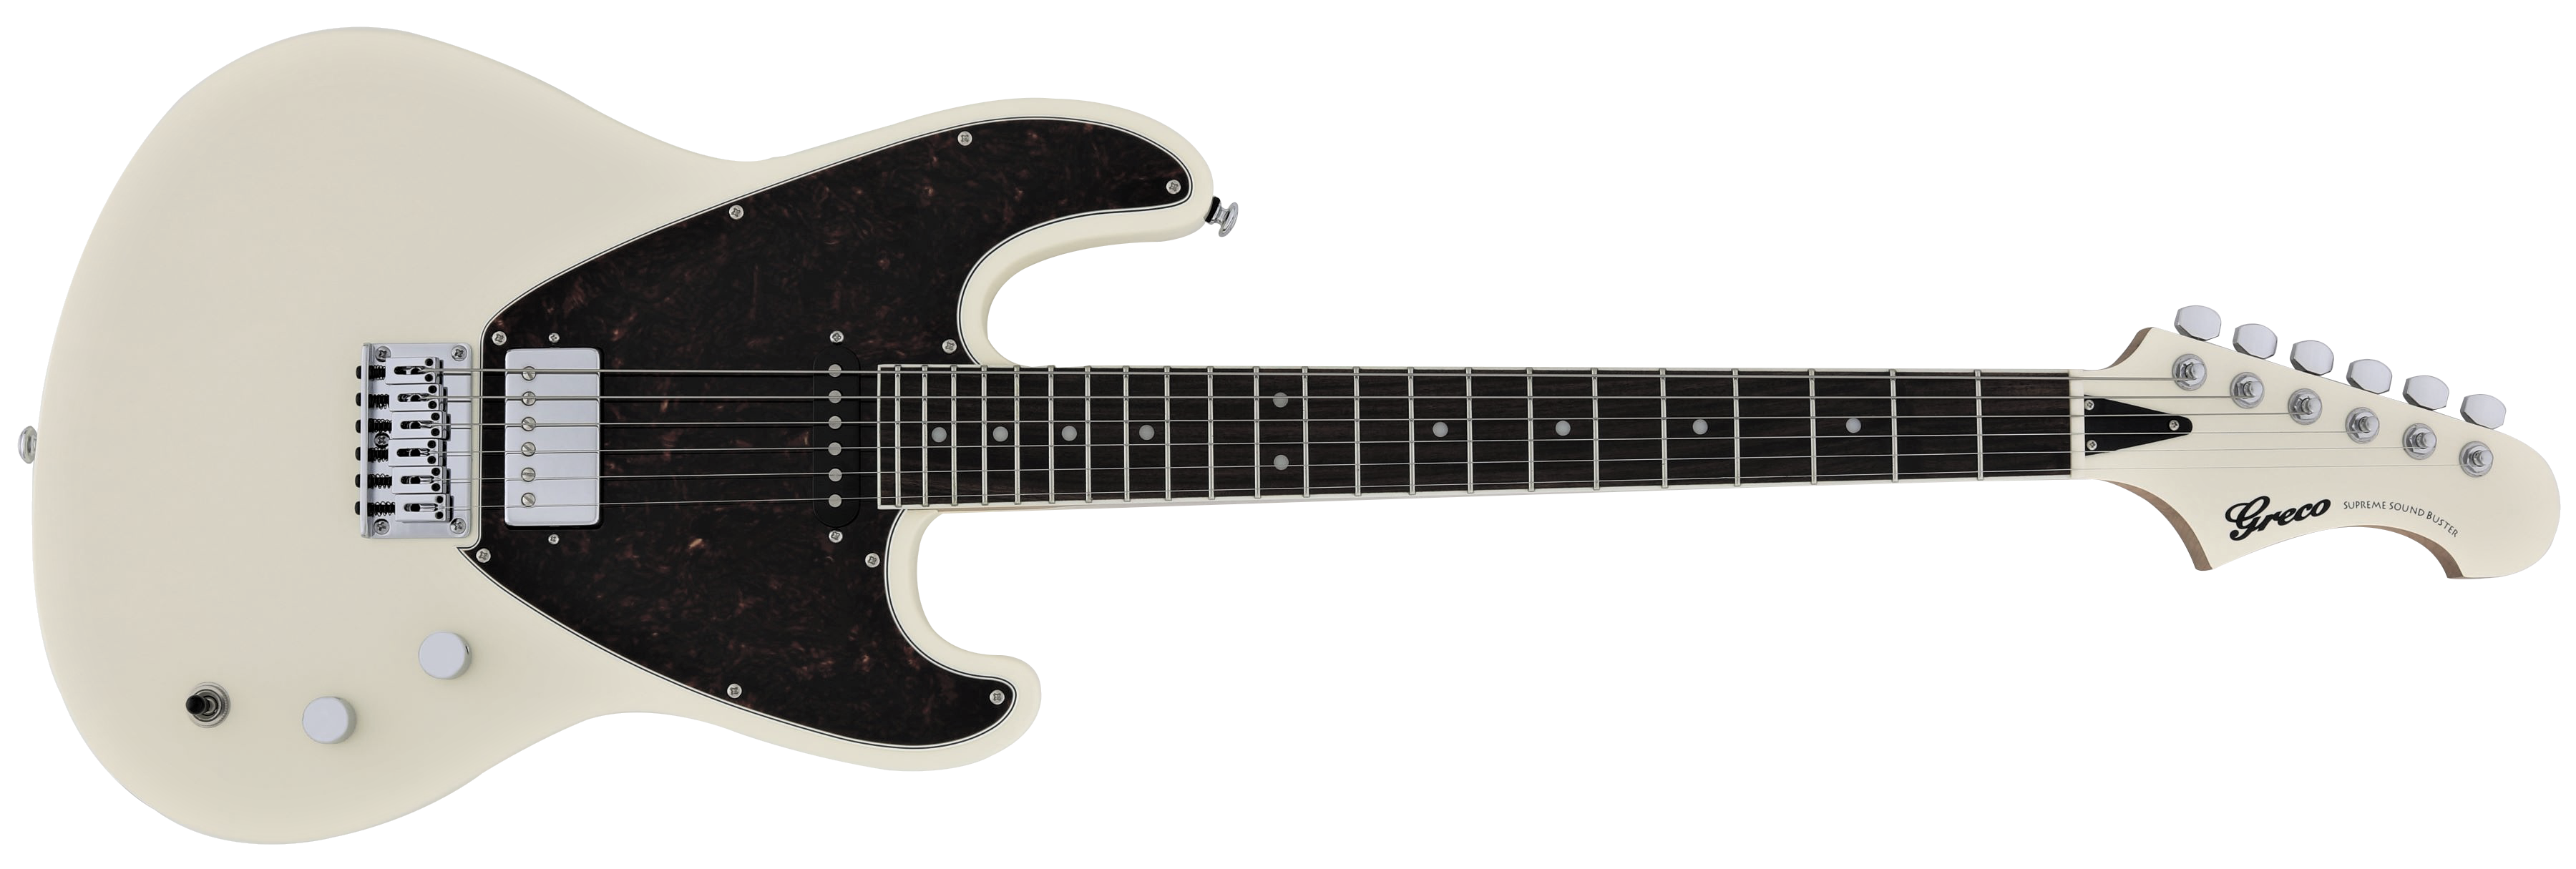 BGW22 SH – Zemaitis Guitar Company